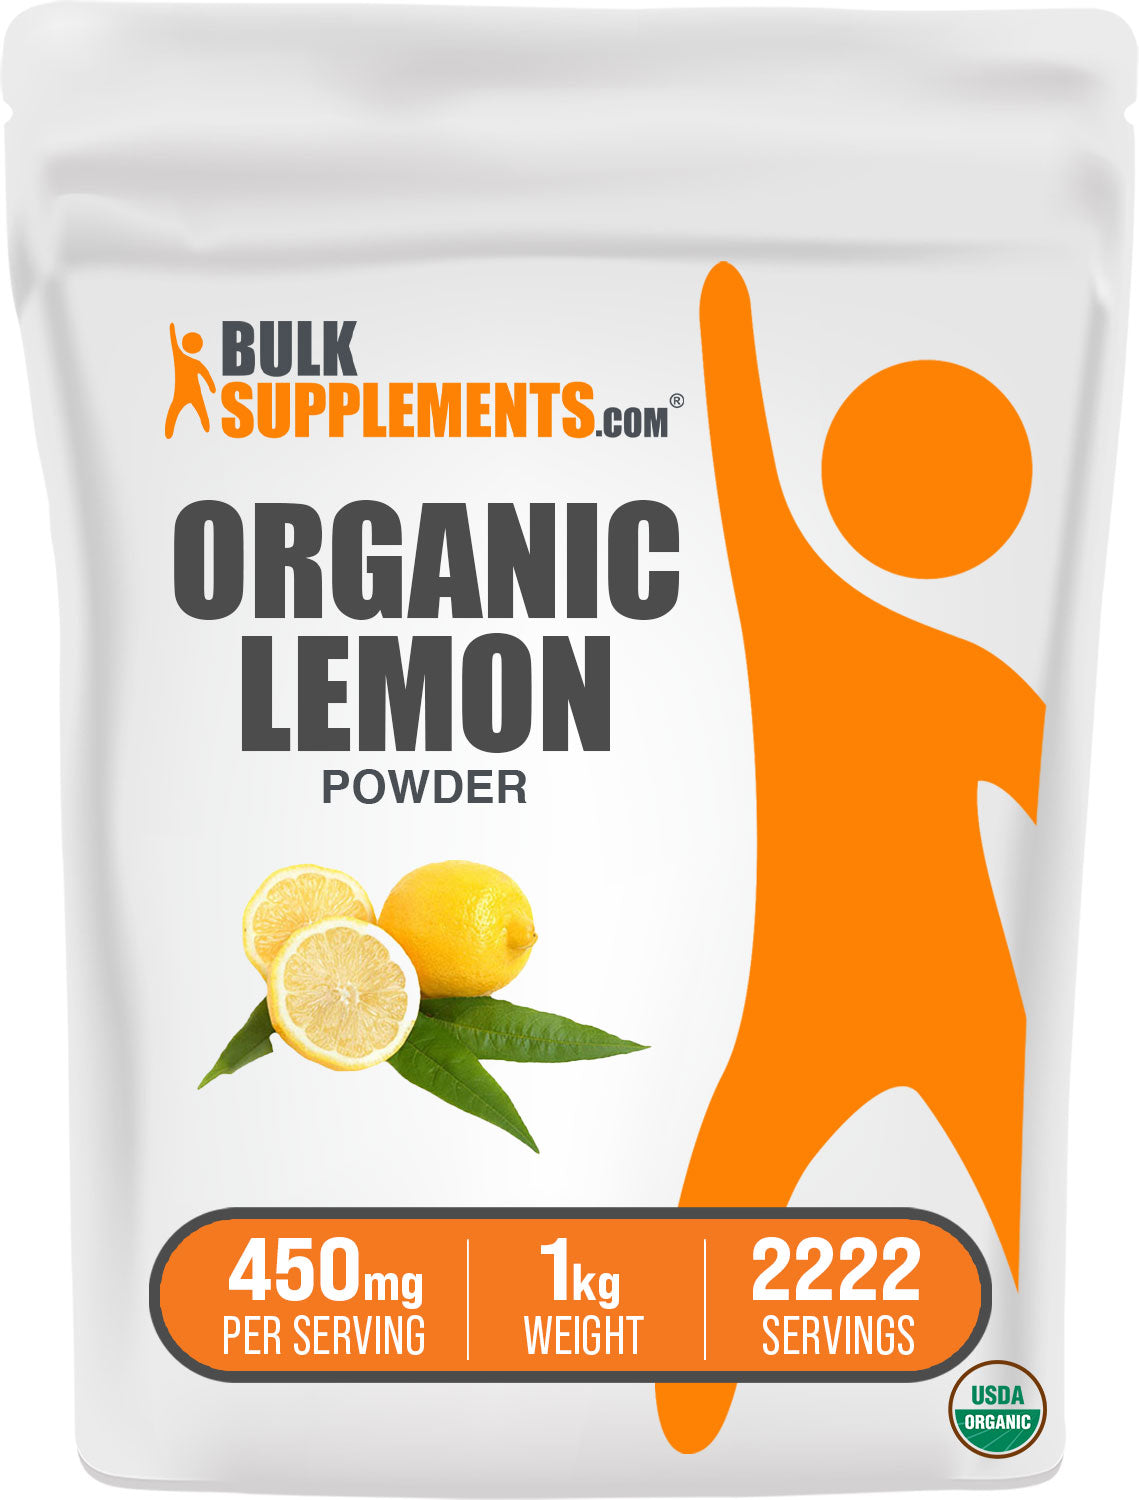 BulkSupplements.com Organic Lemon Powder 1KG Bag